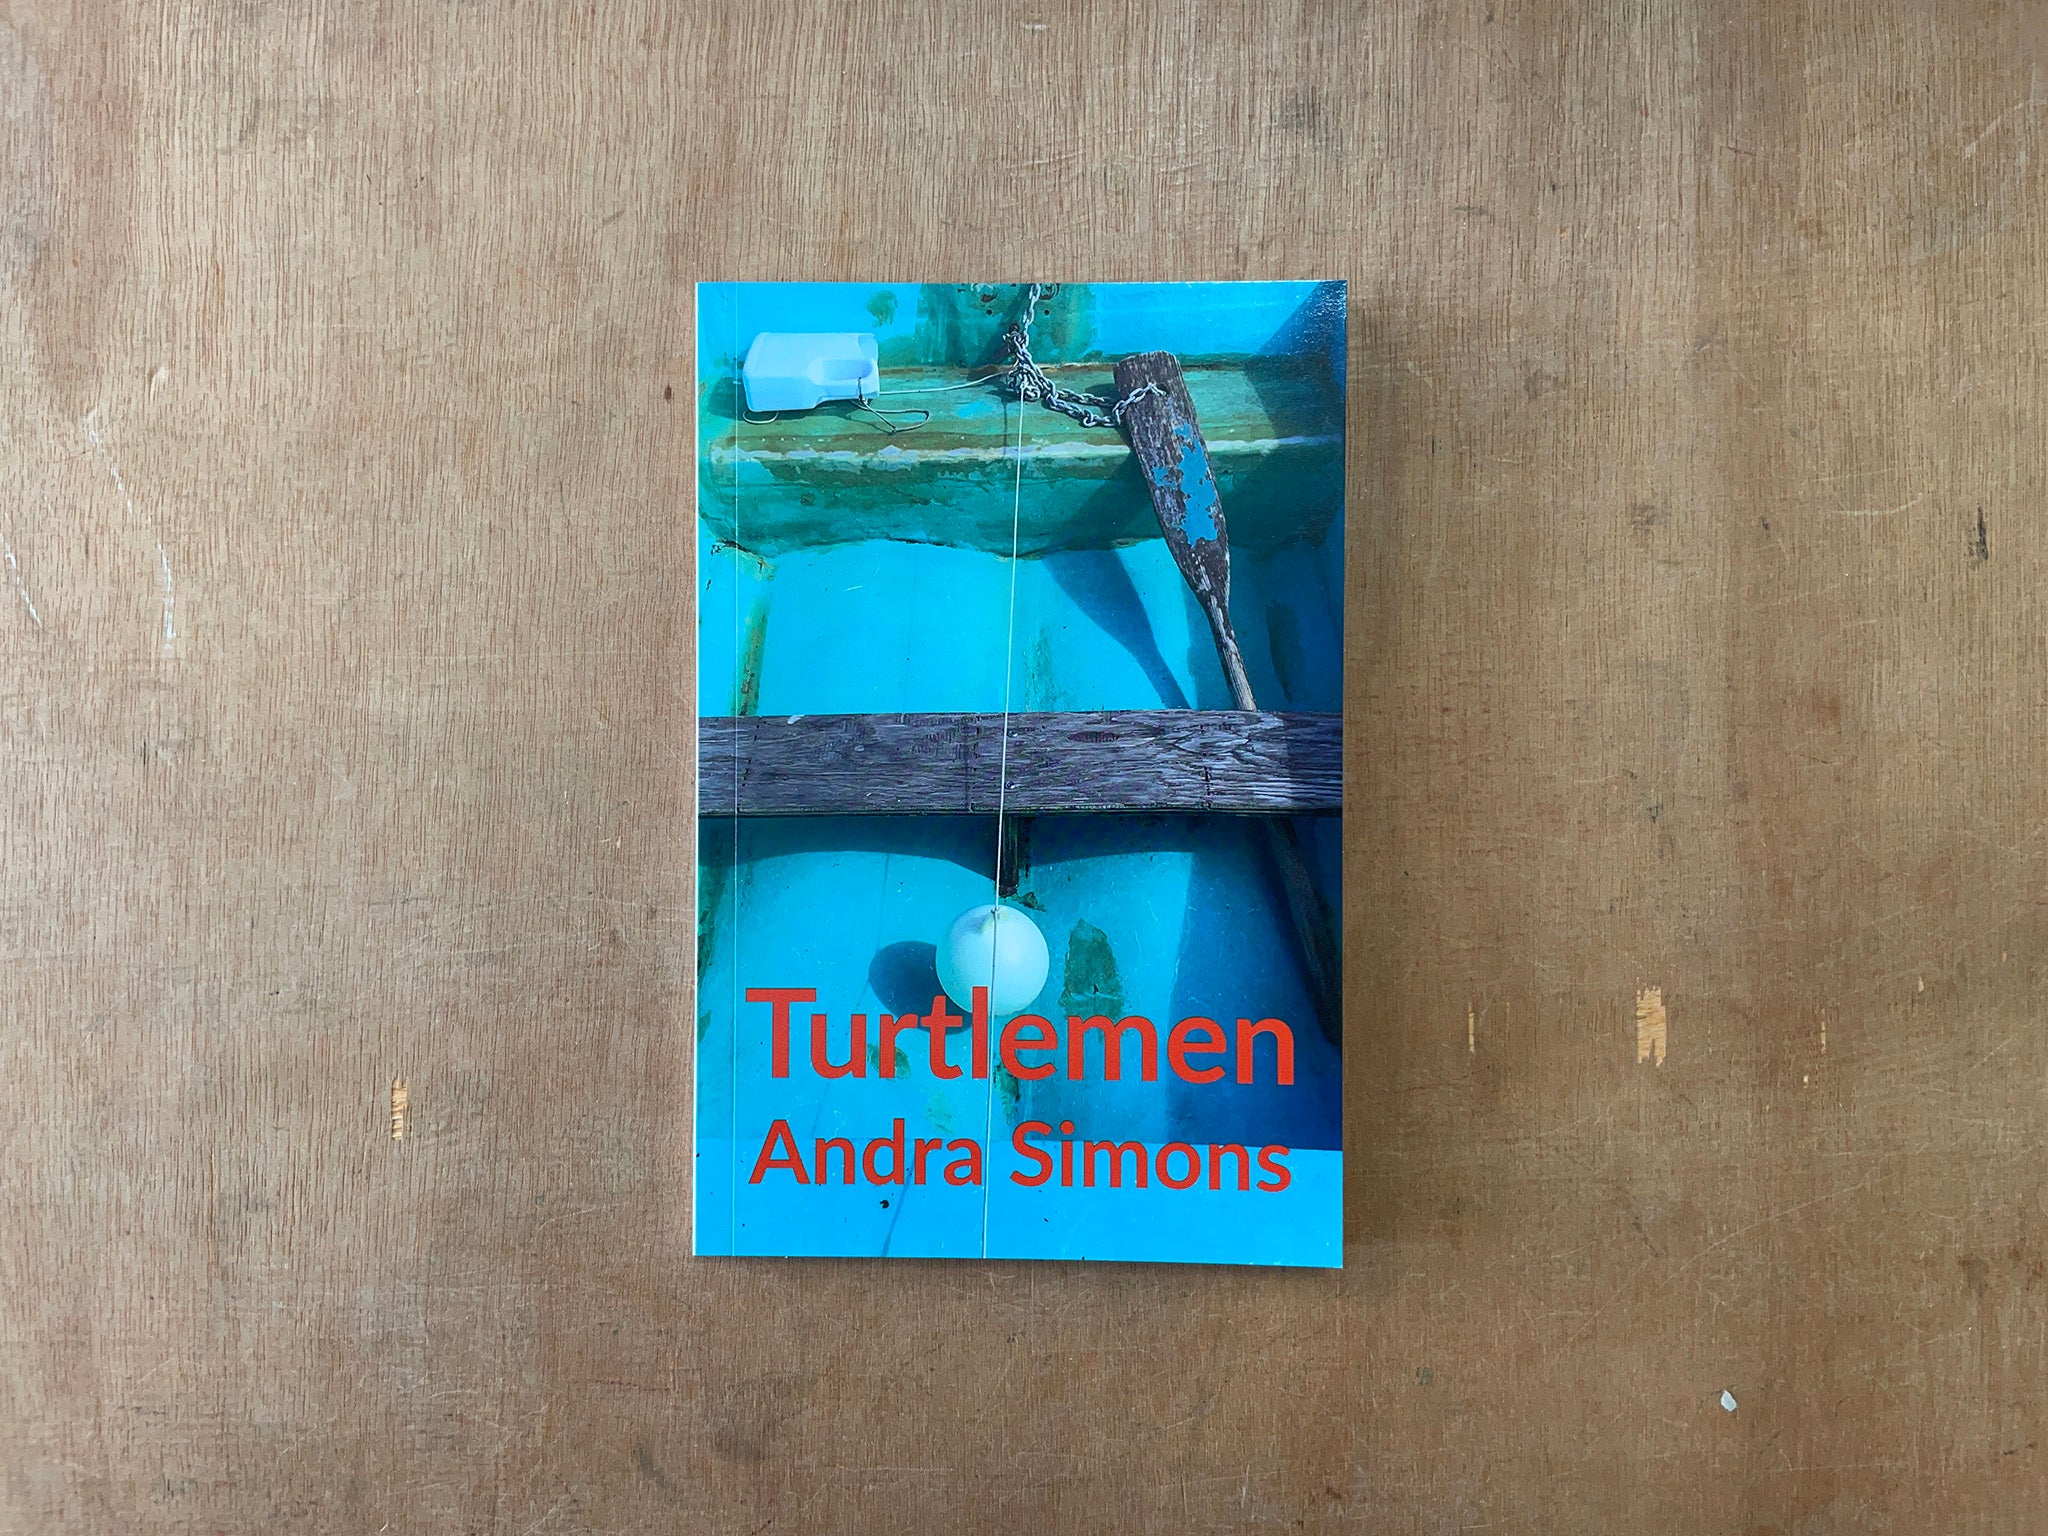 TURTLEMEN by Andrea Simons